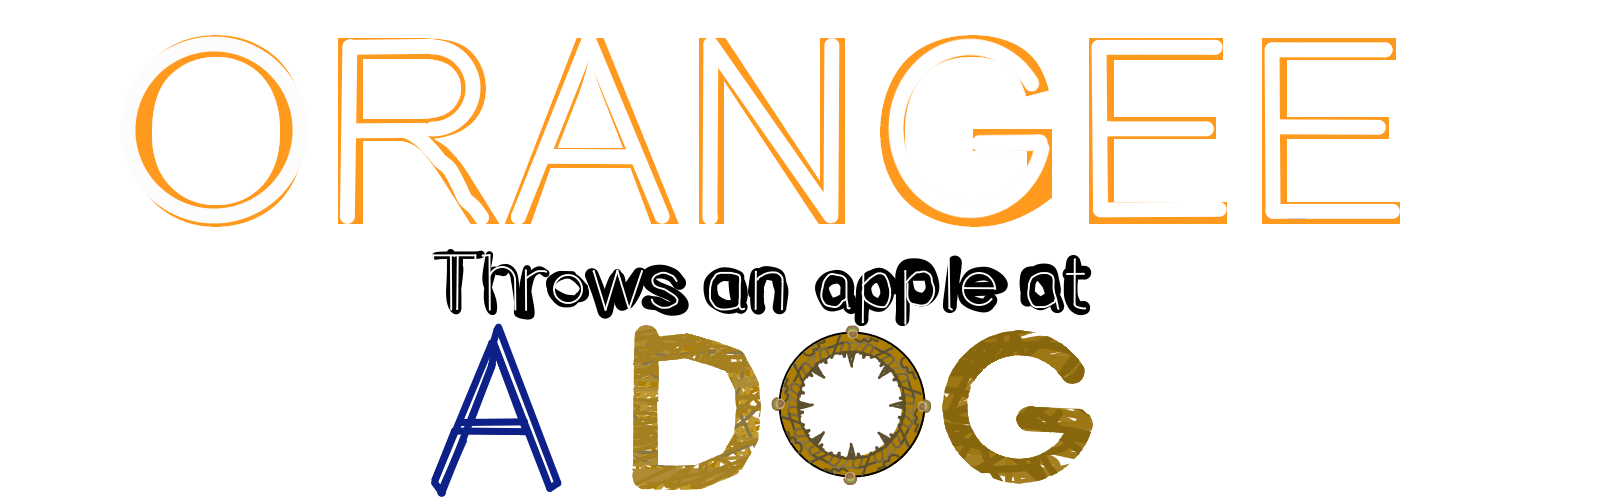 Orangee throws an apple at a Dog